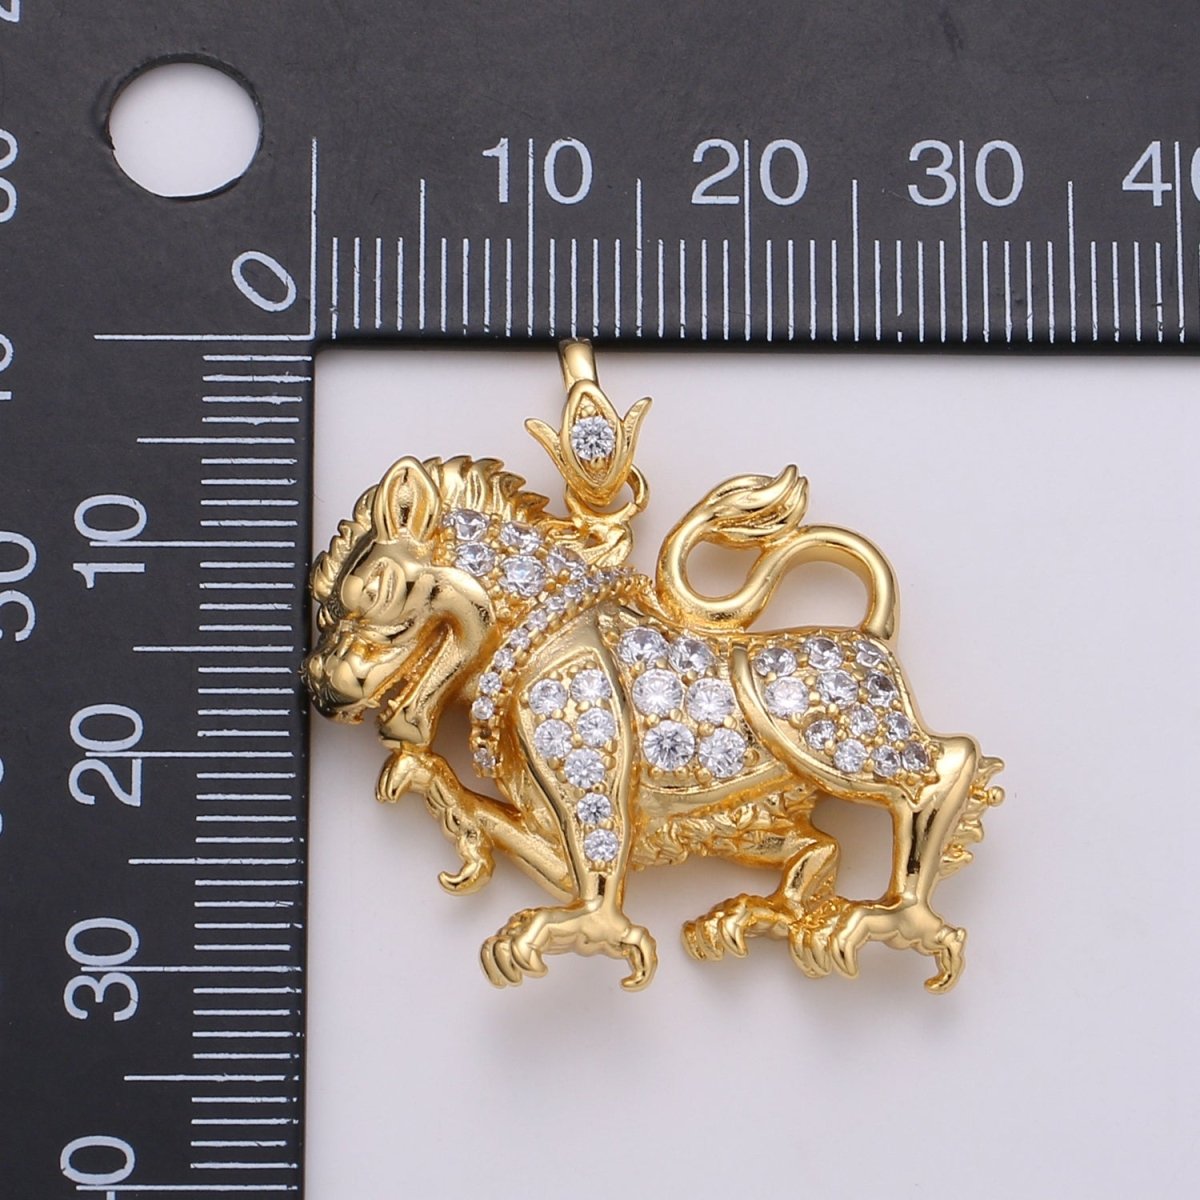 24K Gold Filled Lion Charm Pixiu Pendant Necklace Chinese Lion Legend Charm for Statement Necklace J-123 - DLUXCA